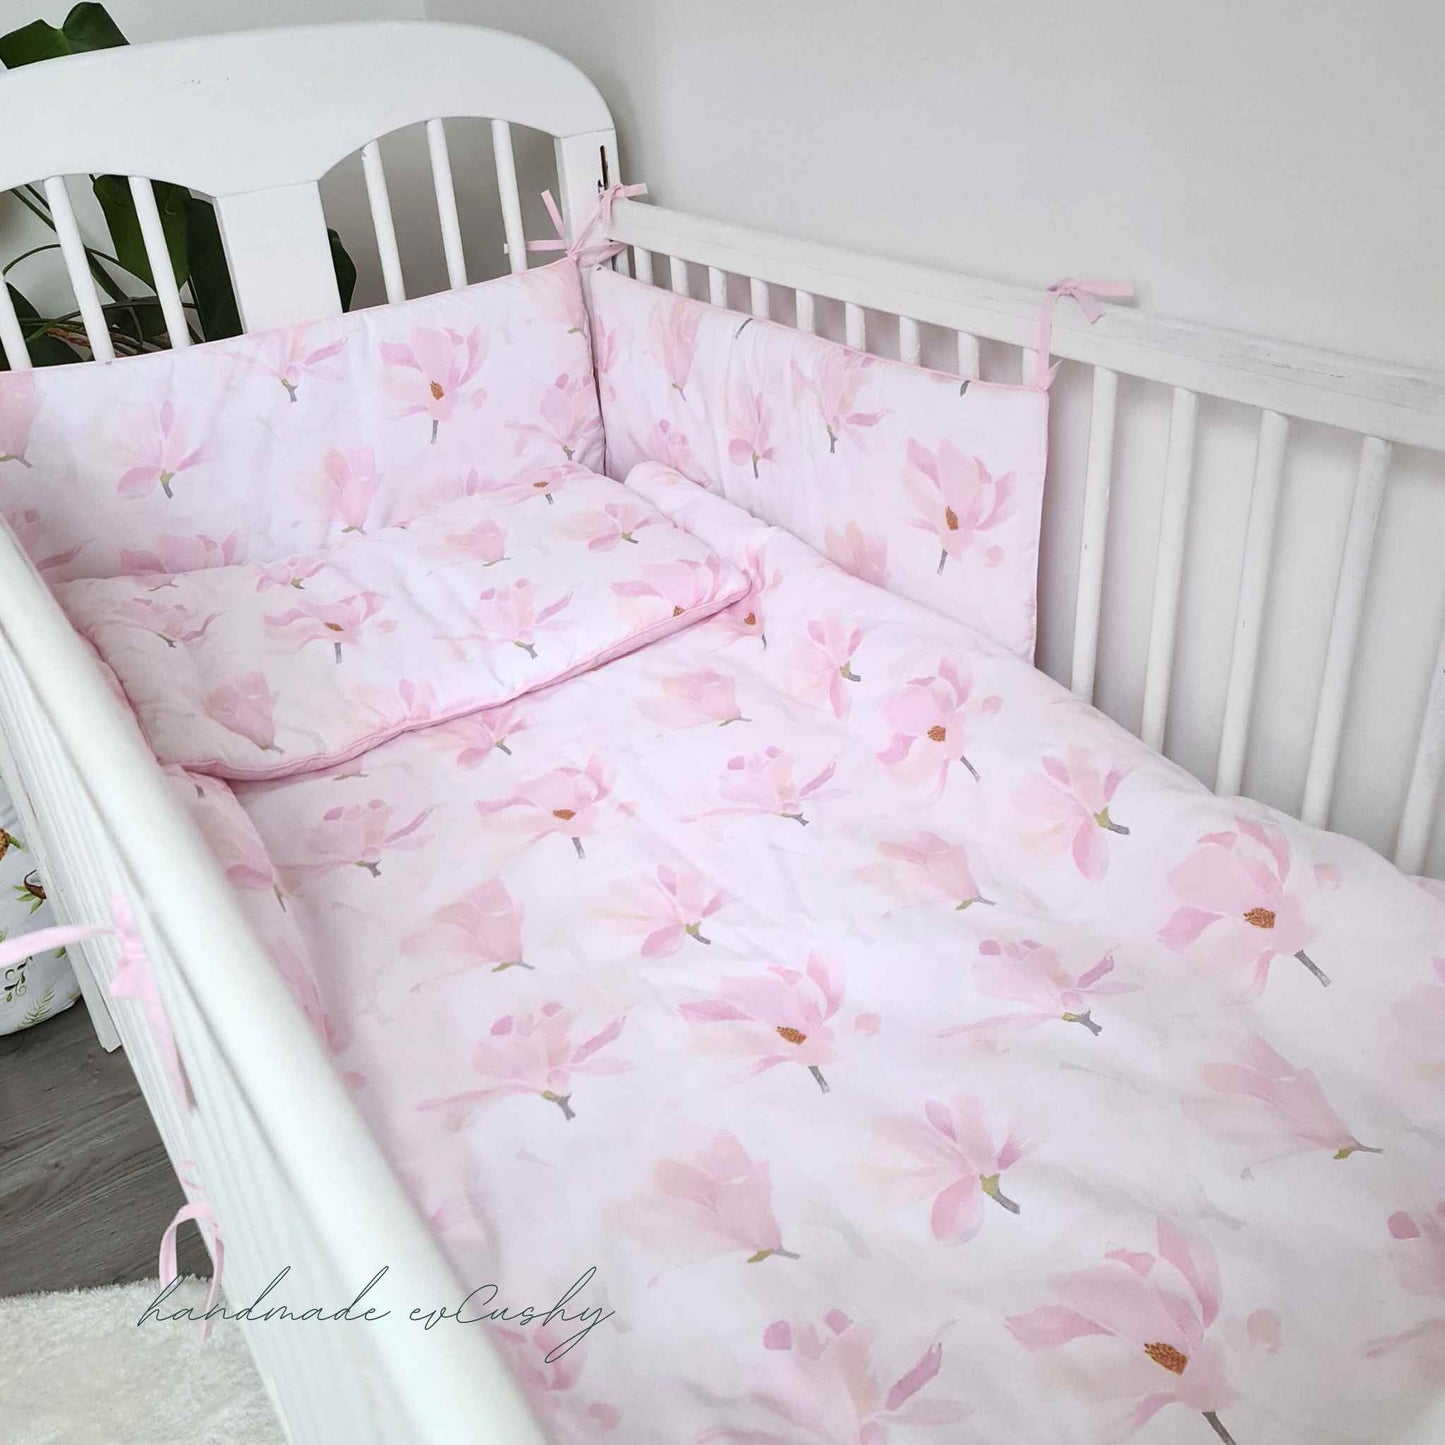 cot bed bedding det duvet pillow cot bed bumper pink magnolia pattern cotton evcushy